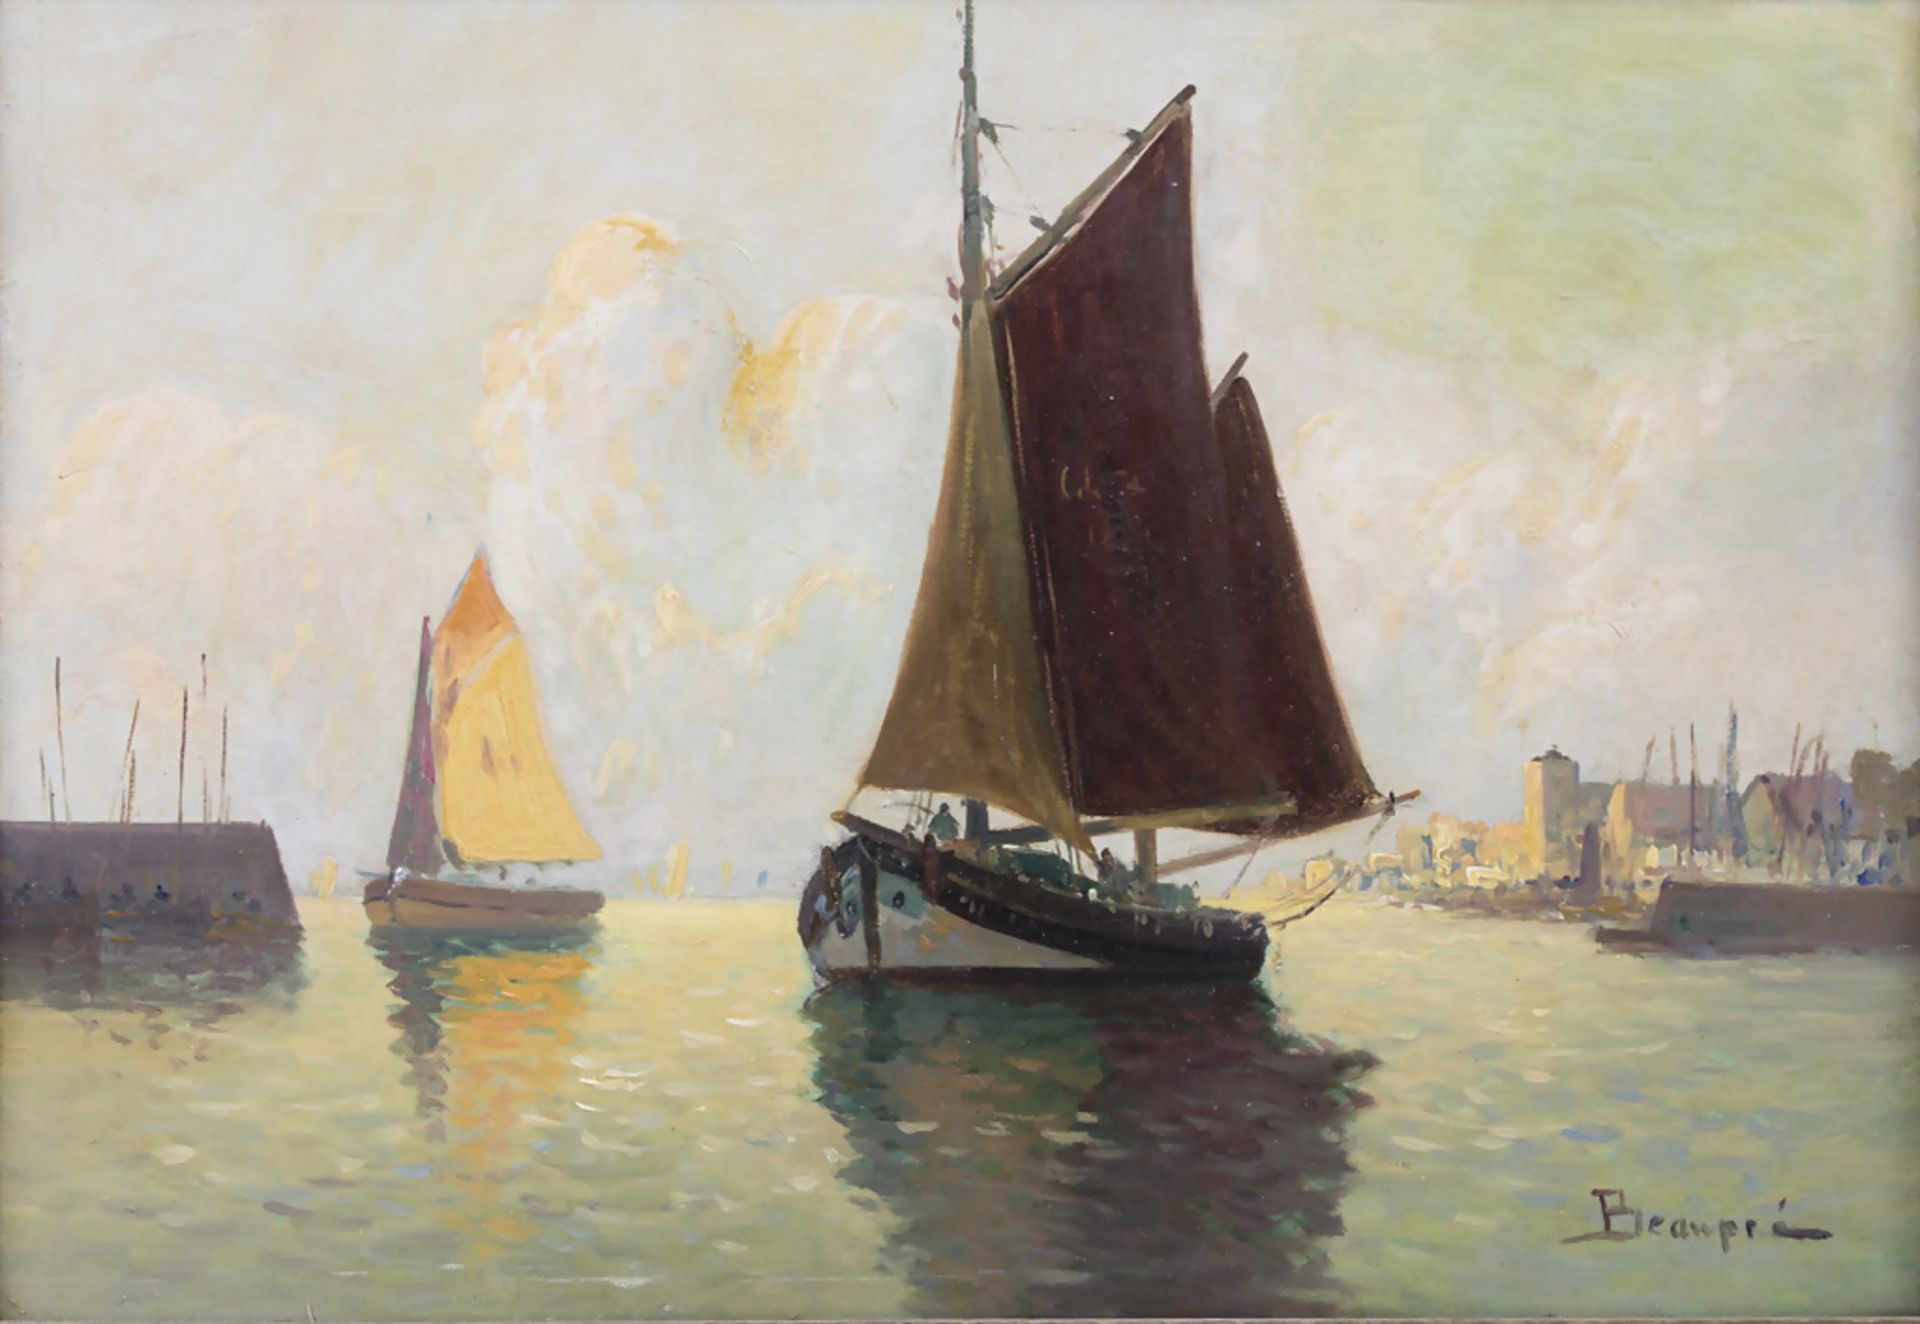 Bastien Beaupré (19./20. Jh.), 'Segelschiff im Hafen' / 'Sailing boat in a harbour', um 1900